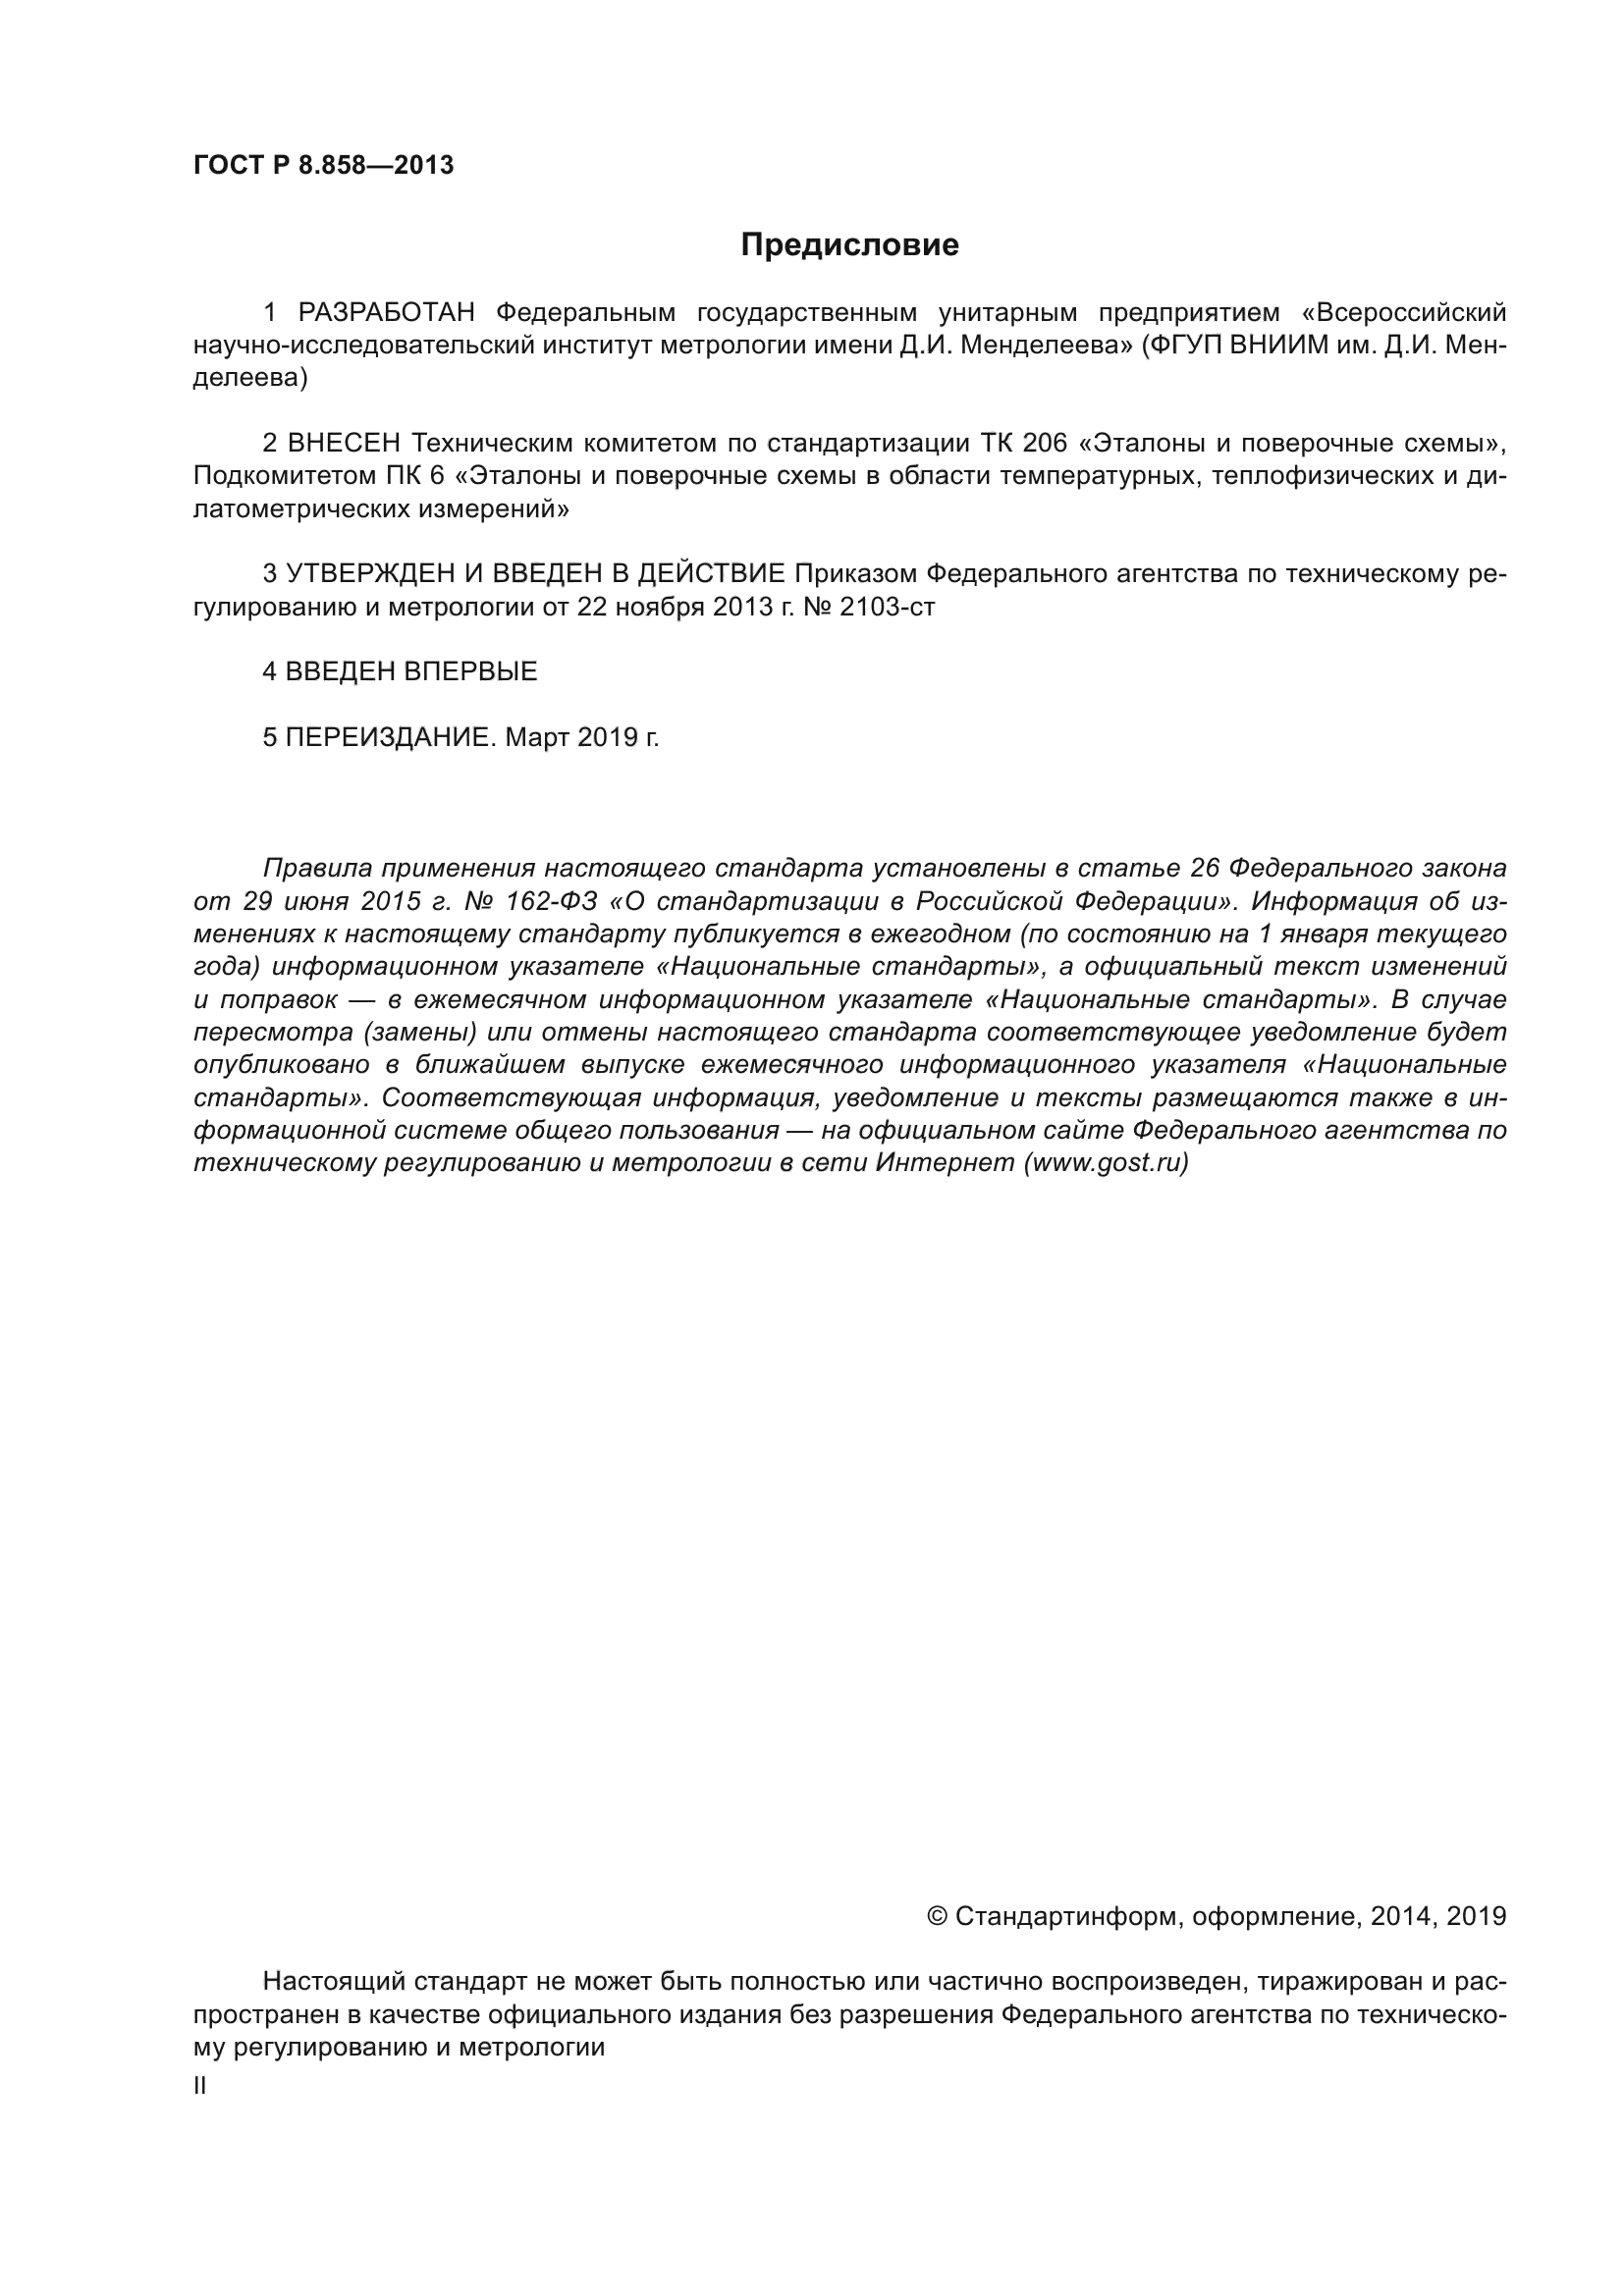 ГОСТ Р 8.858-2013